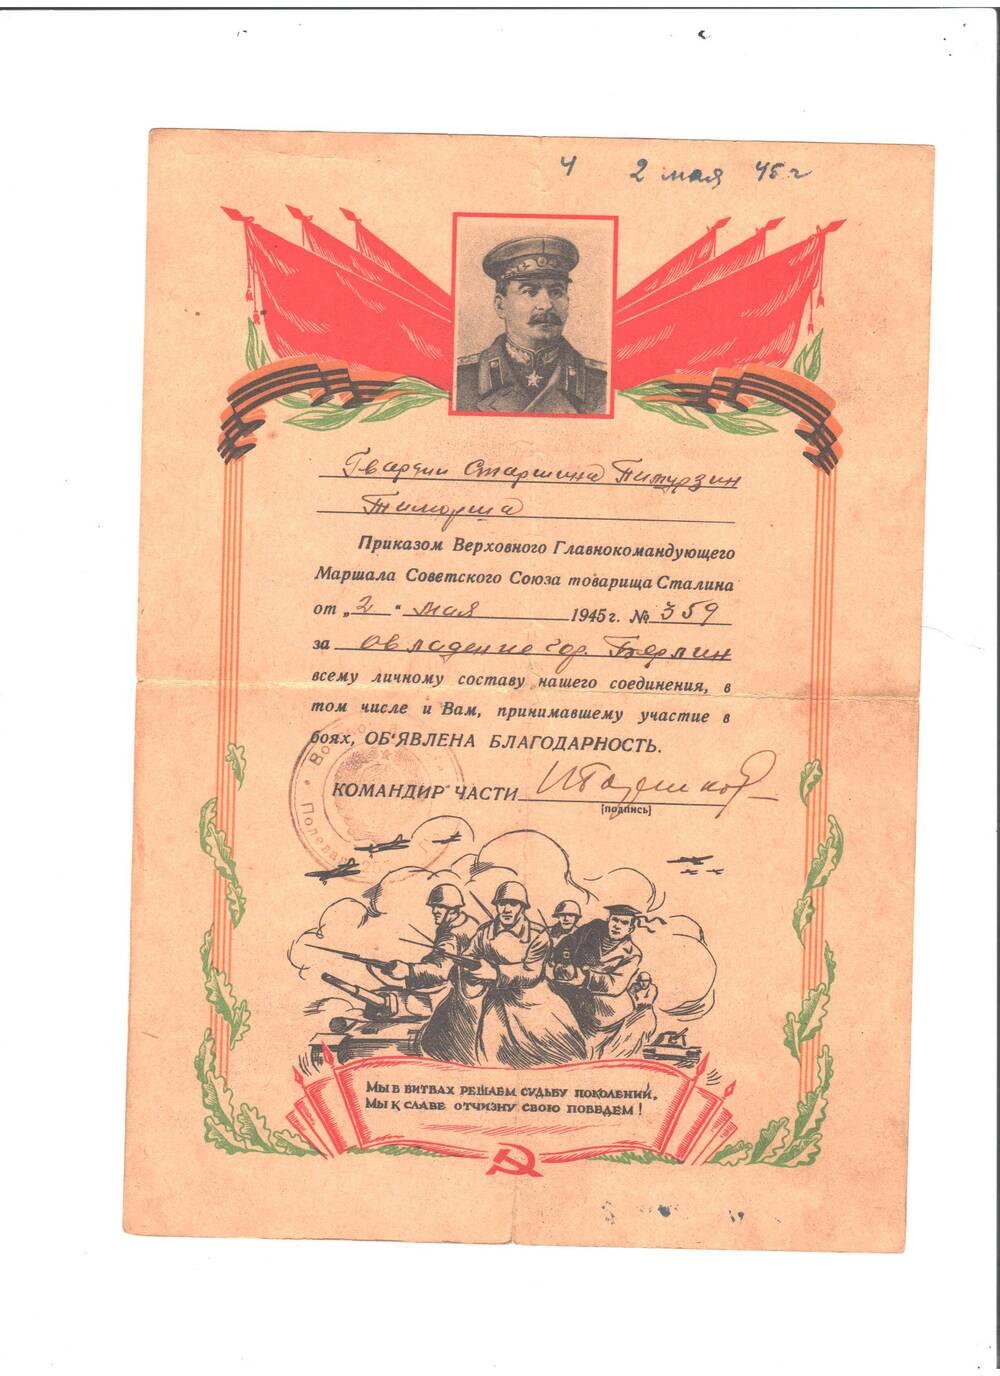 Листок благодарности на имя Пимурзина Тимерша за овладение городом Берлином, 2 мая 1945 года